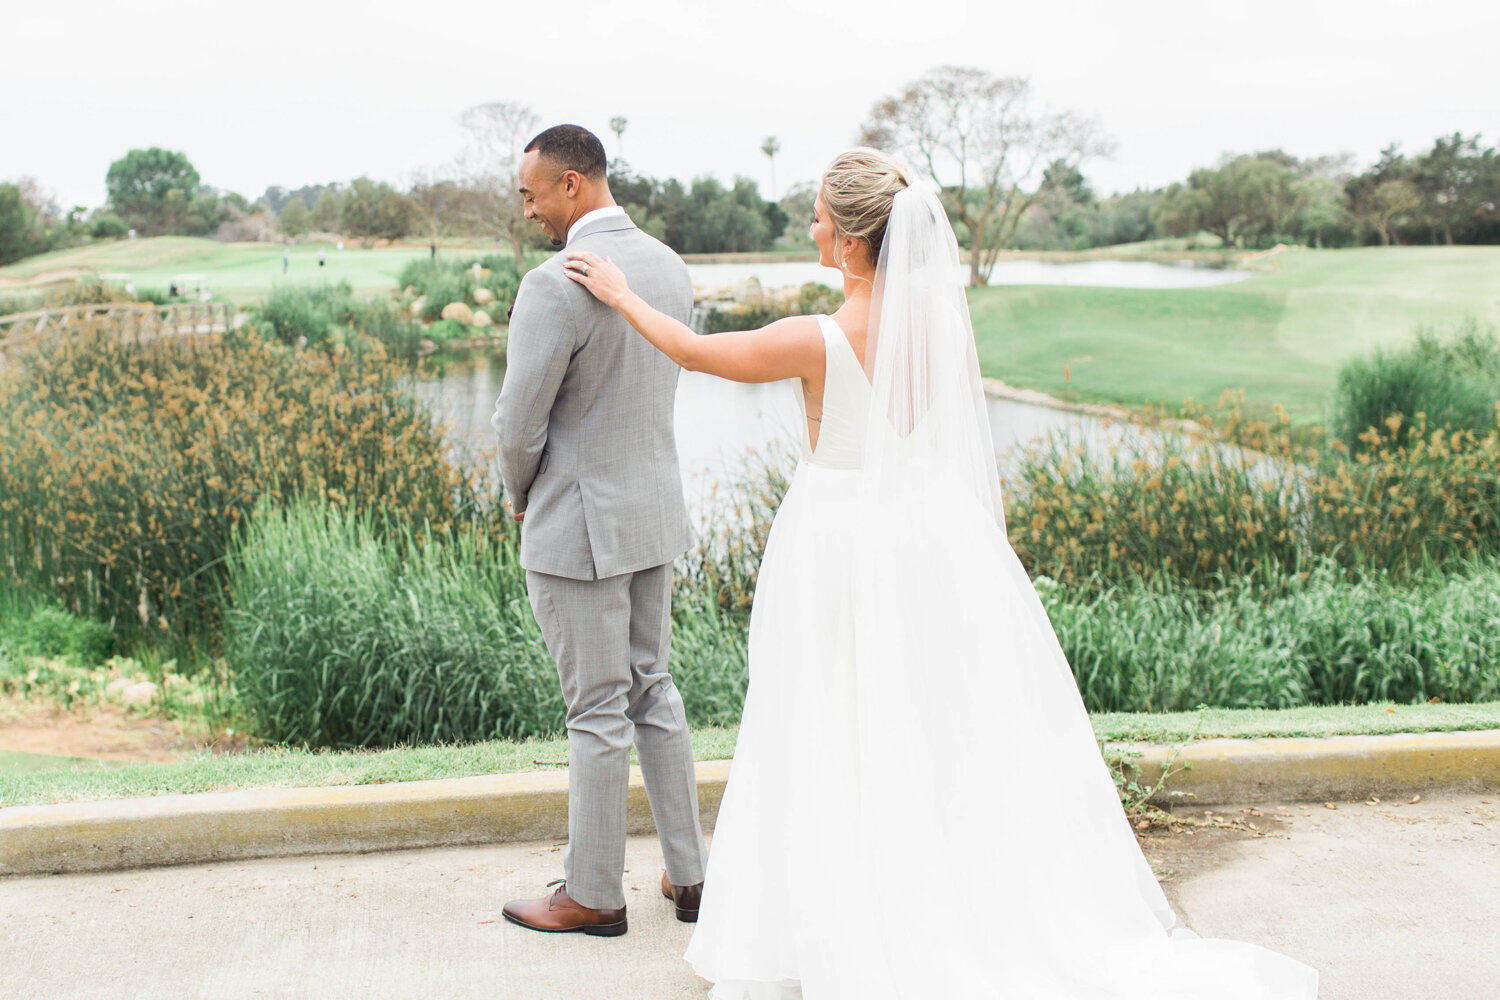 wisteria-photography.com | Wisteria Photography | Glen Annie Golf Club | Engagement Weddings | Southern California Photographer-20.jpg